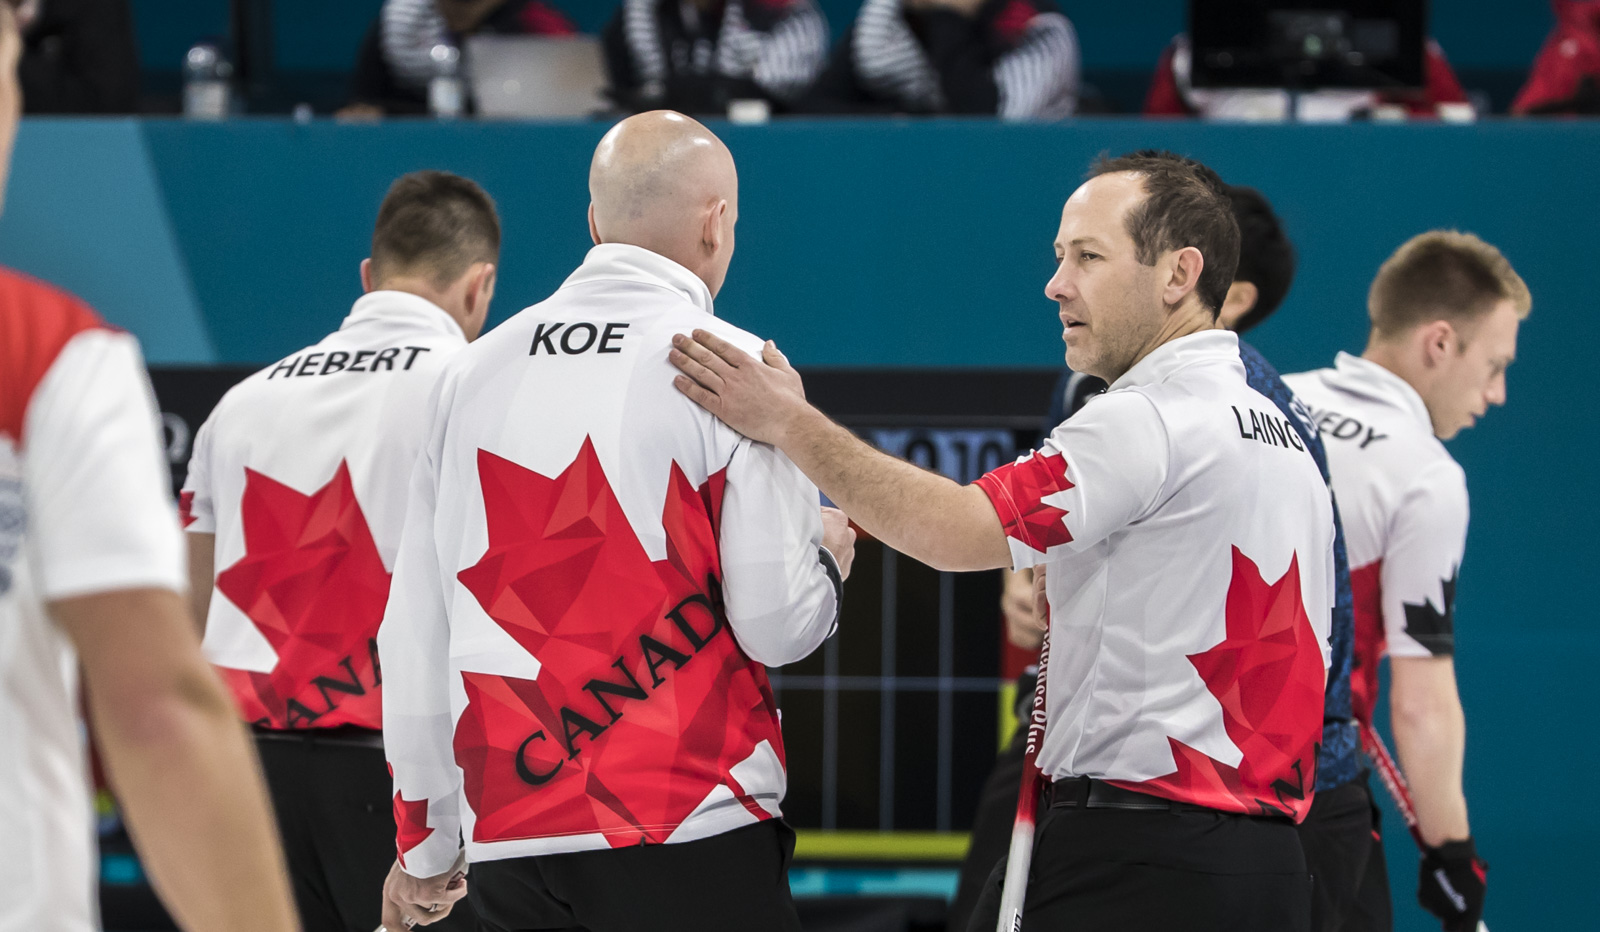 eam Canada Team Koe PyeongChang 2018